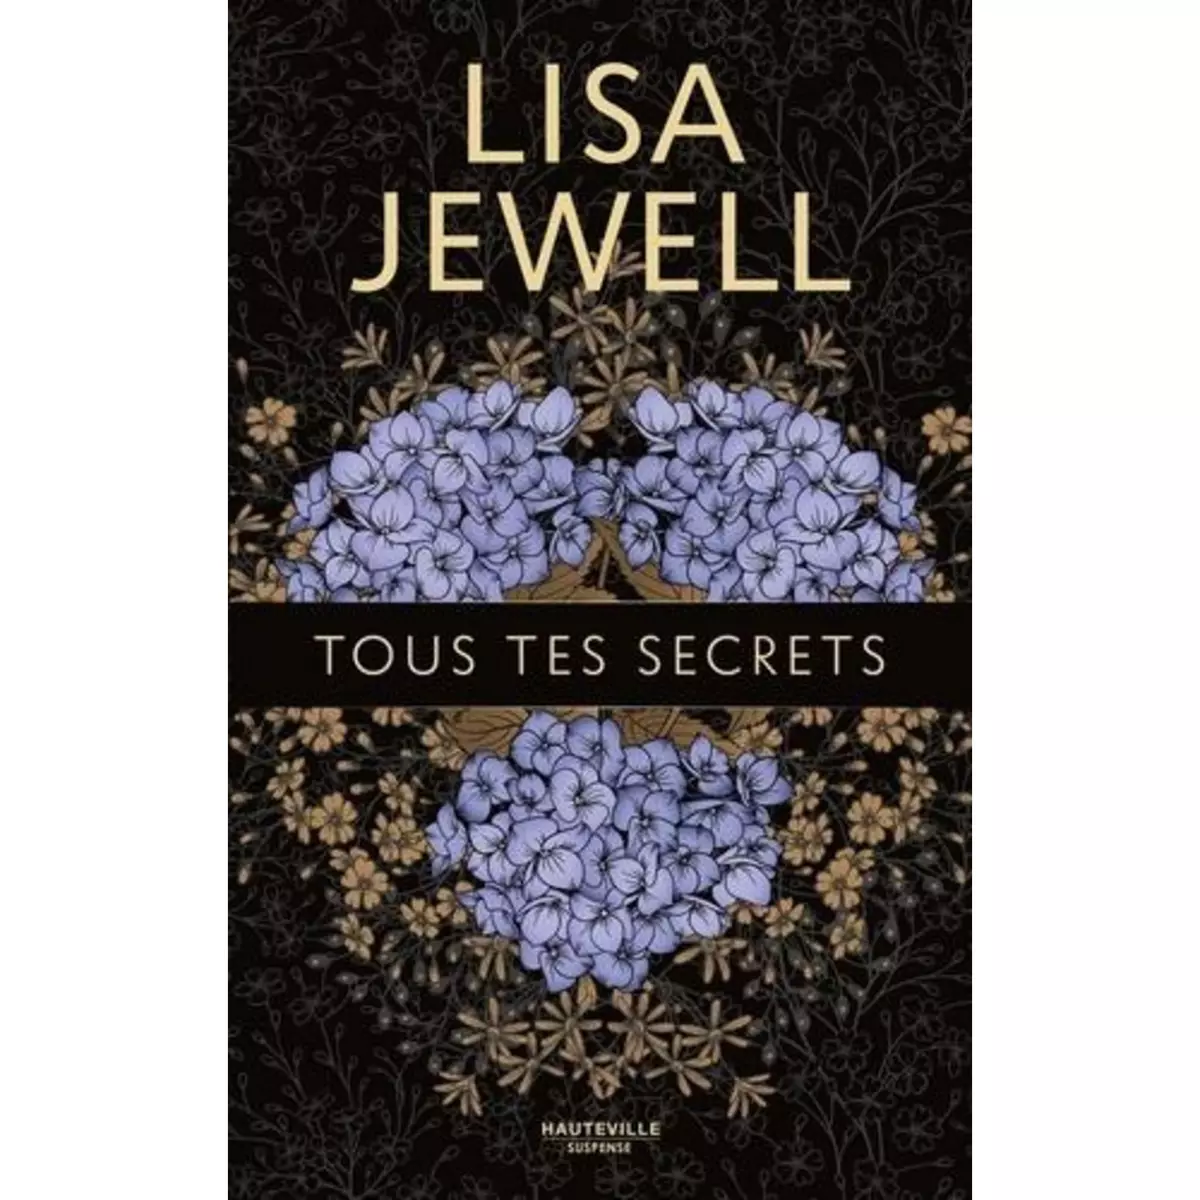  TOUS TES SECRETS, Jewell Lisa